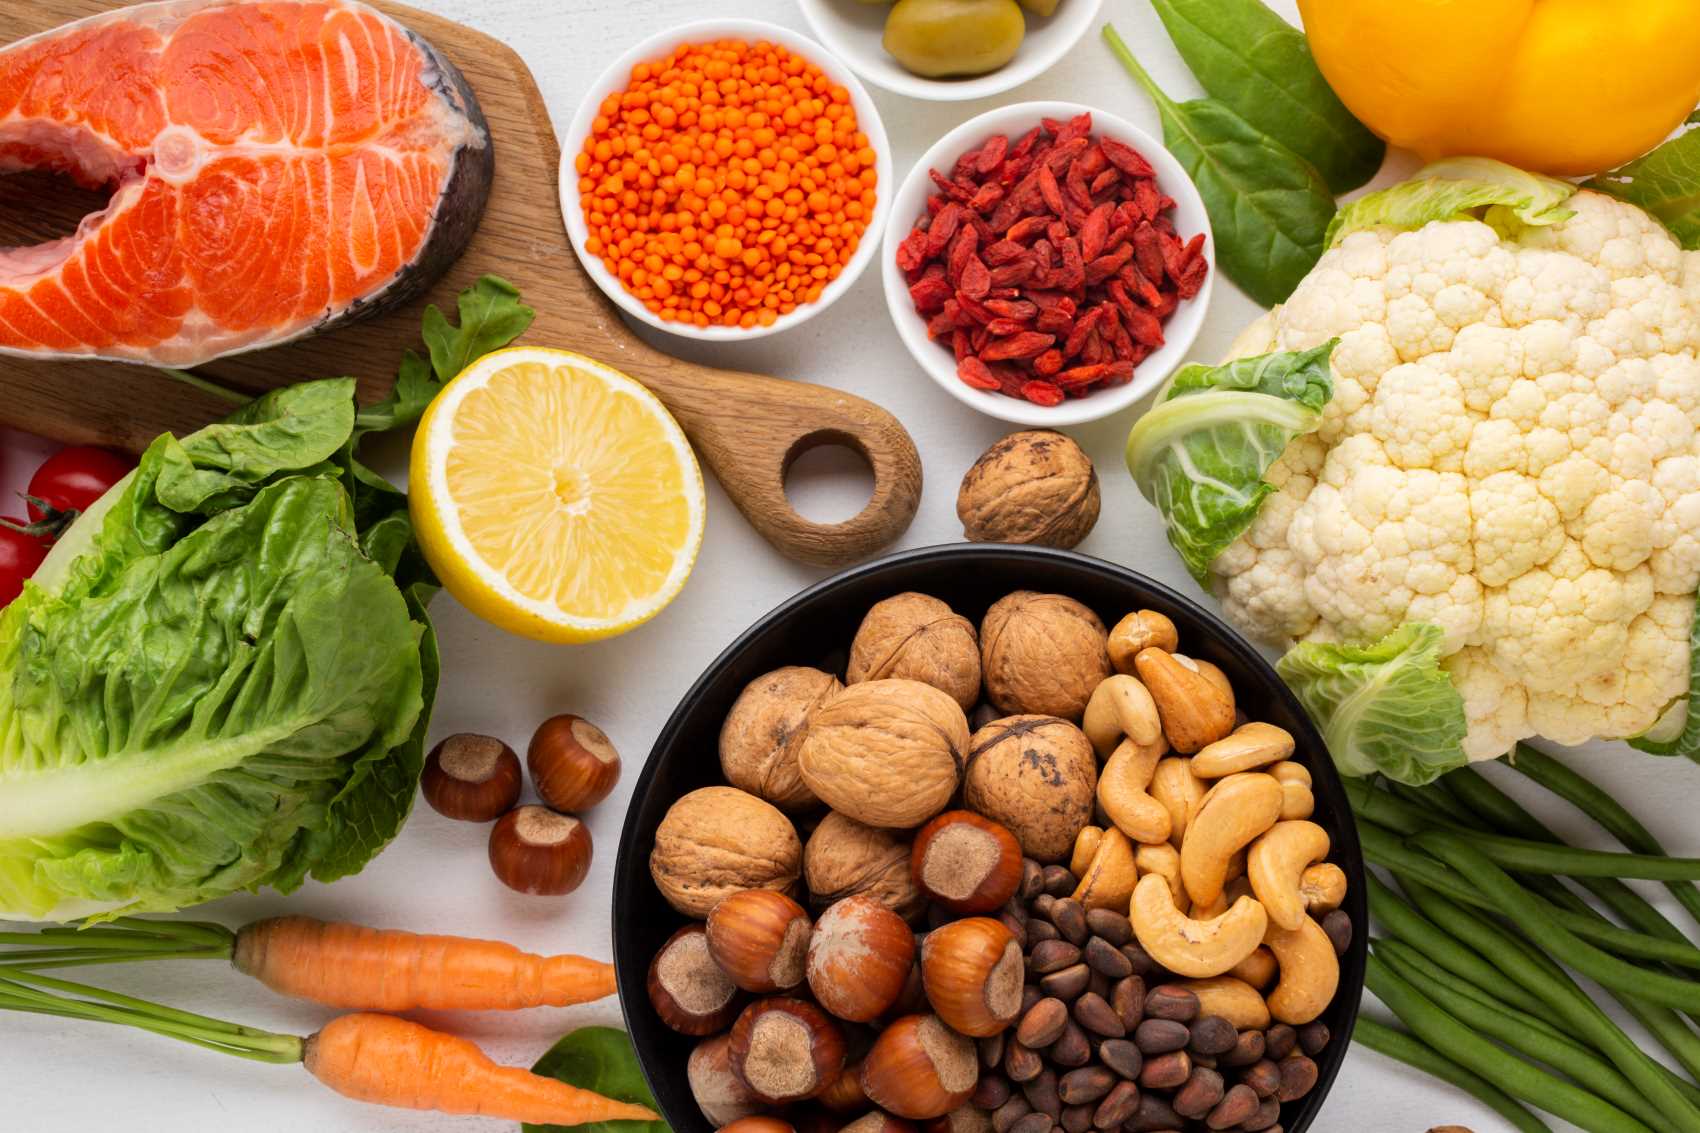 Inilah 5 Daftar Makanan Sehat untuk Penderita Kolesterol Tinggi, Tetap Jaga Kadar Kolesterol Tetap Aman